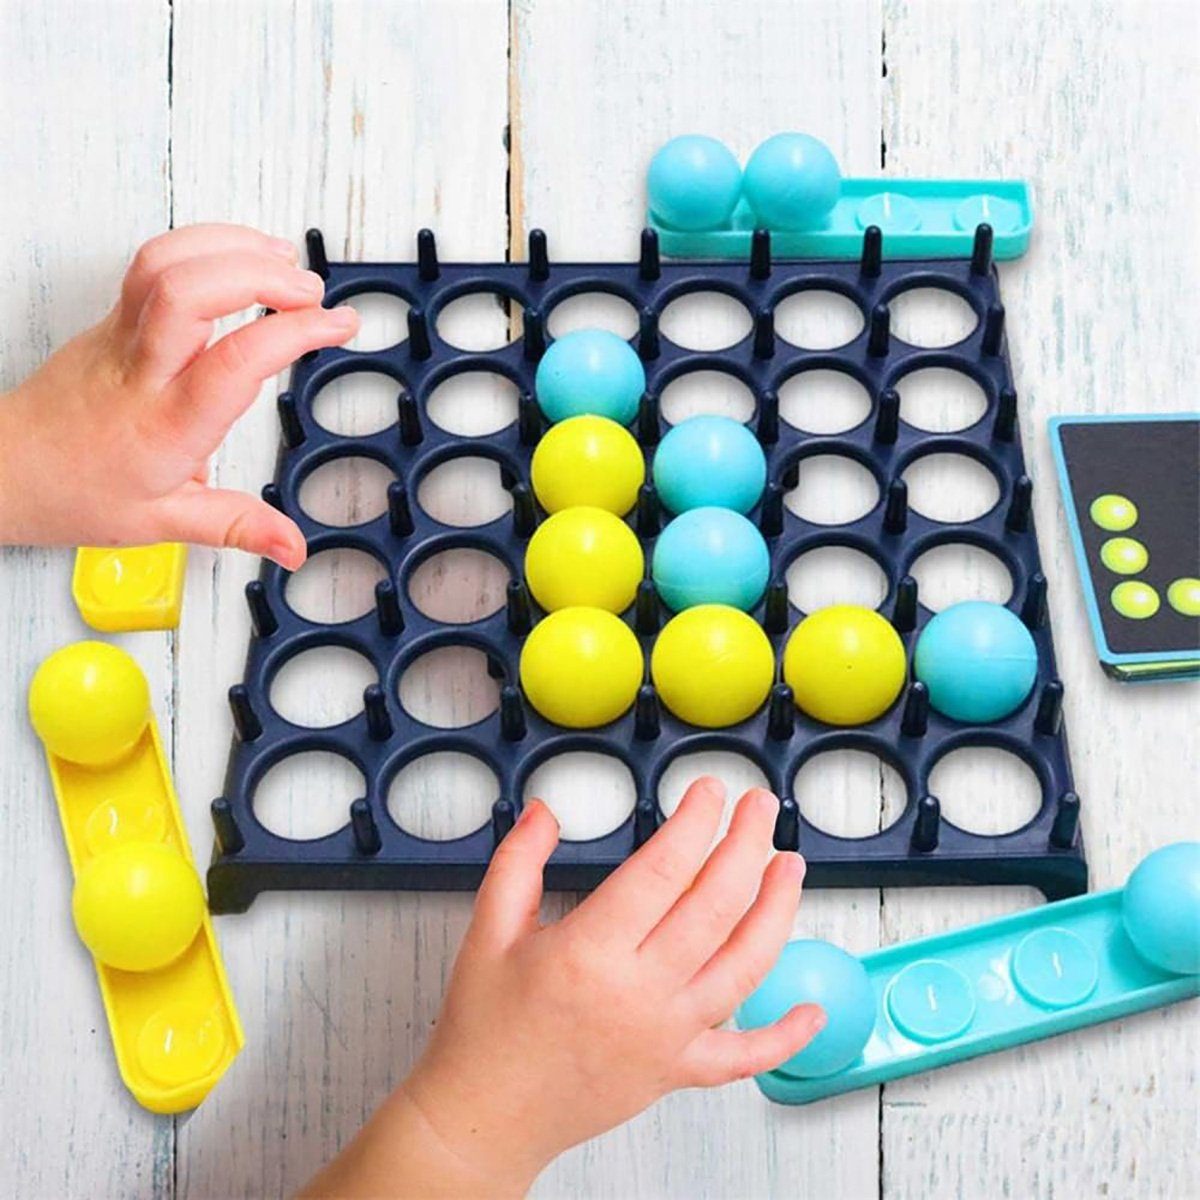 götäzer Neues Flummi Eltern-Kind-Kinderkoordinations-Brettspielspielzeug Interaktives Hüpfballspiel,